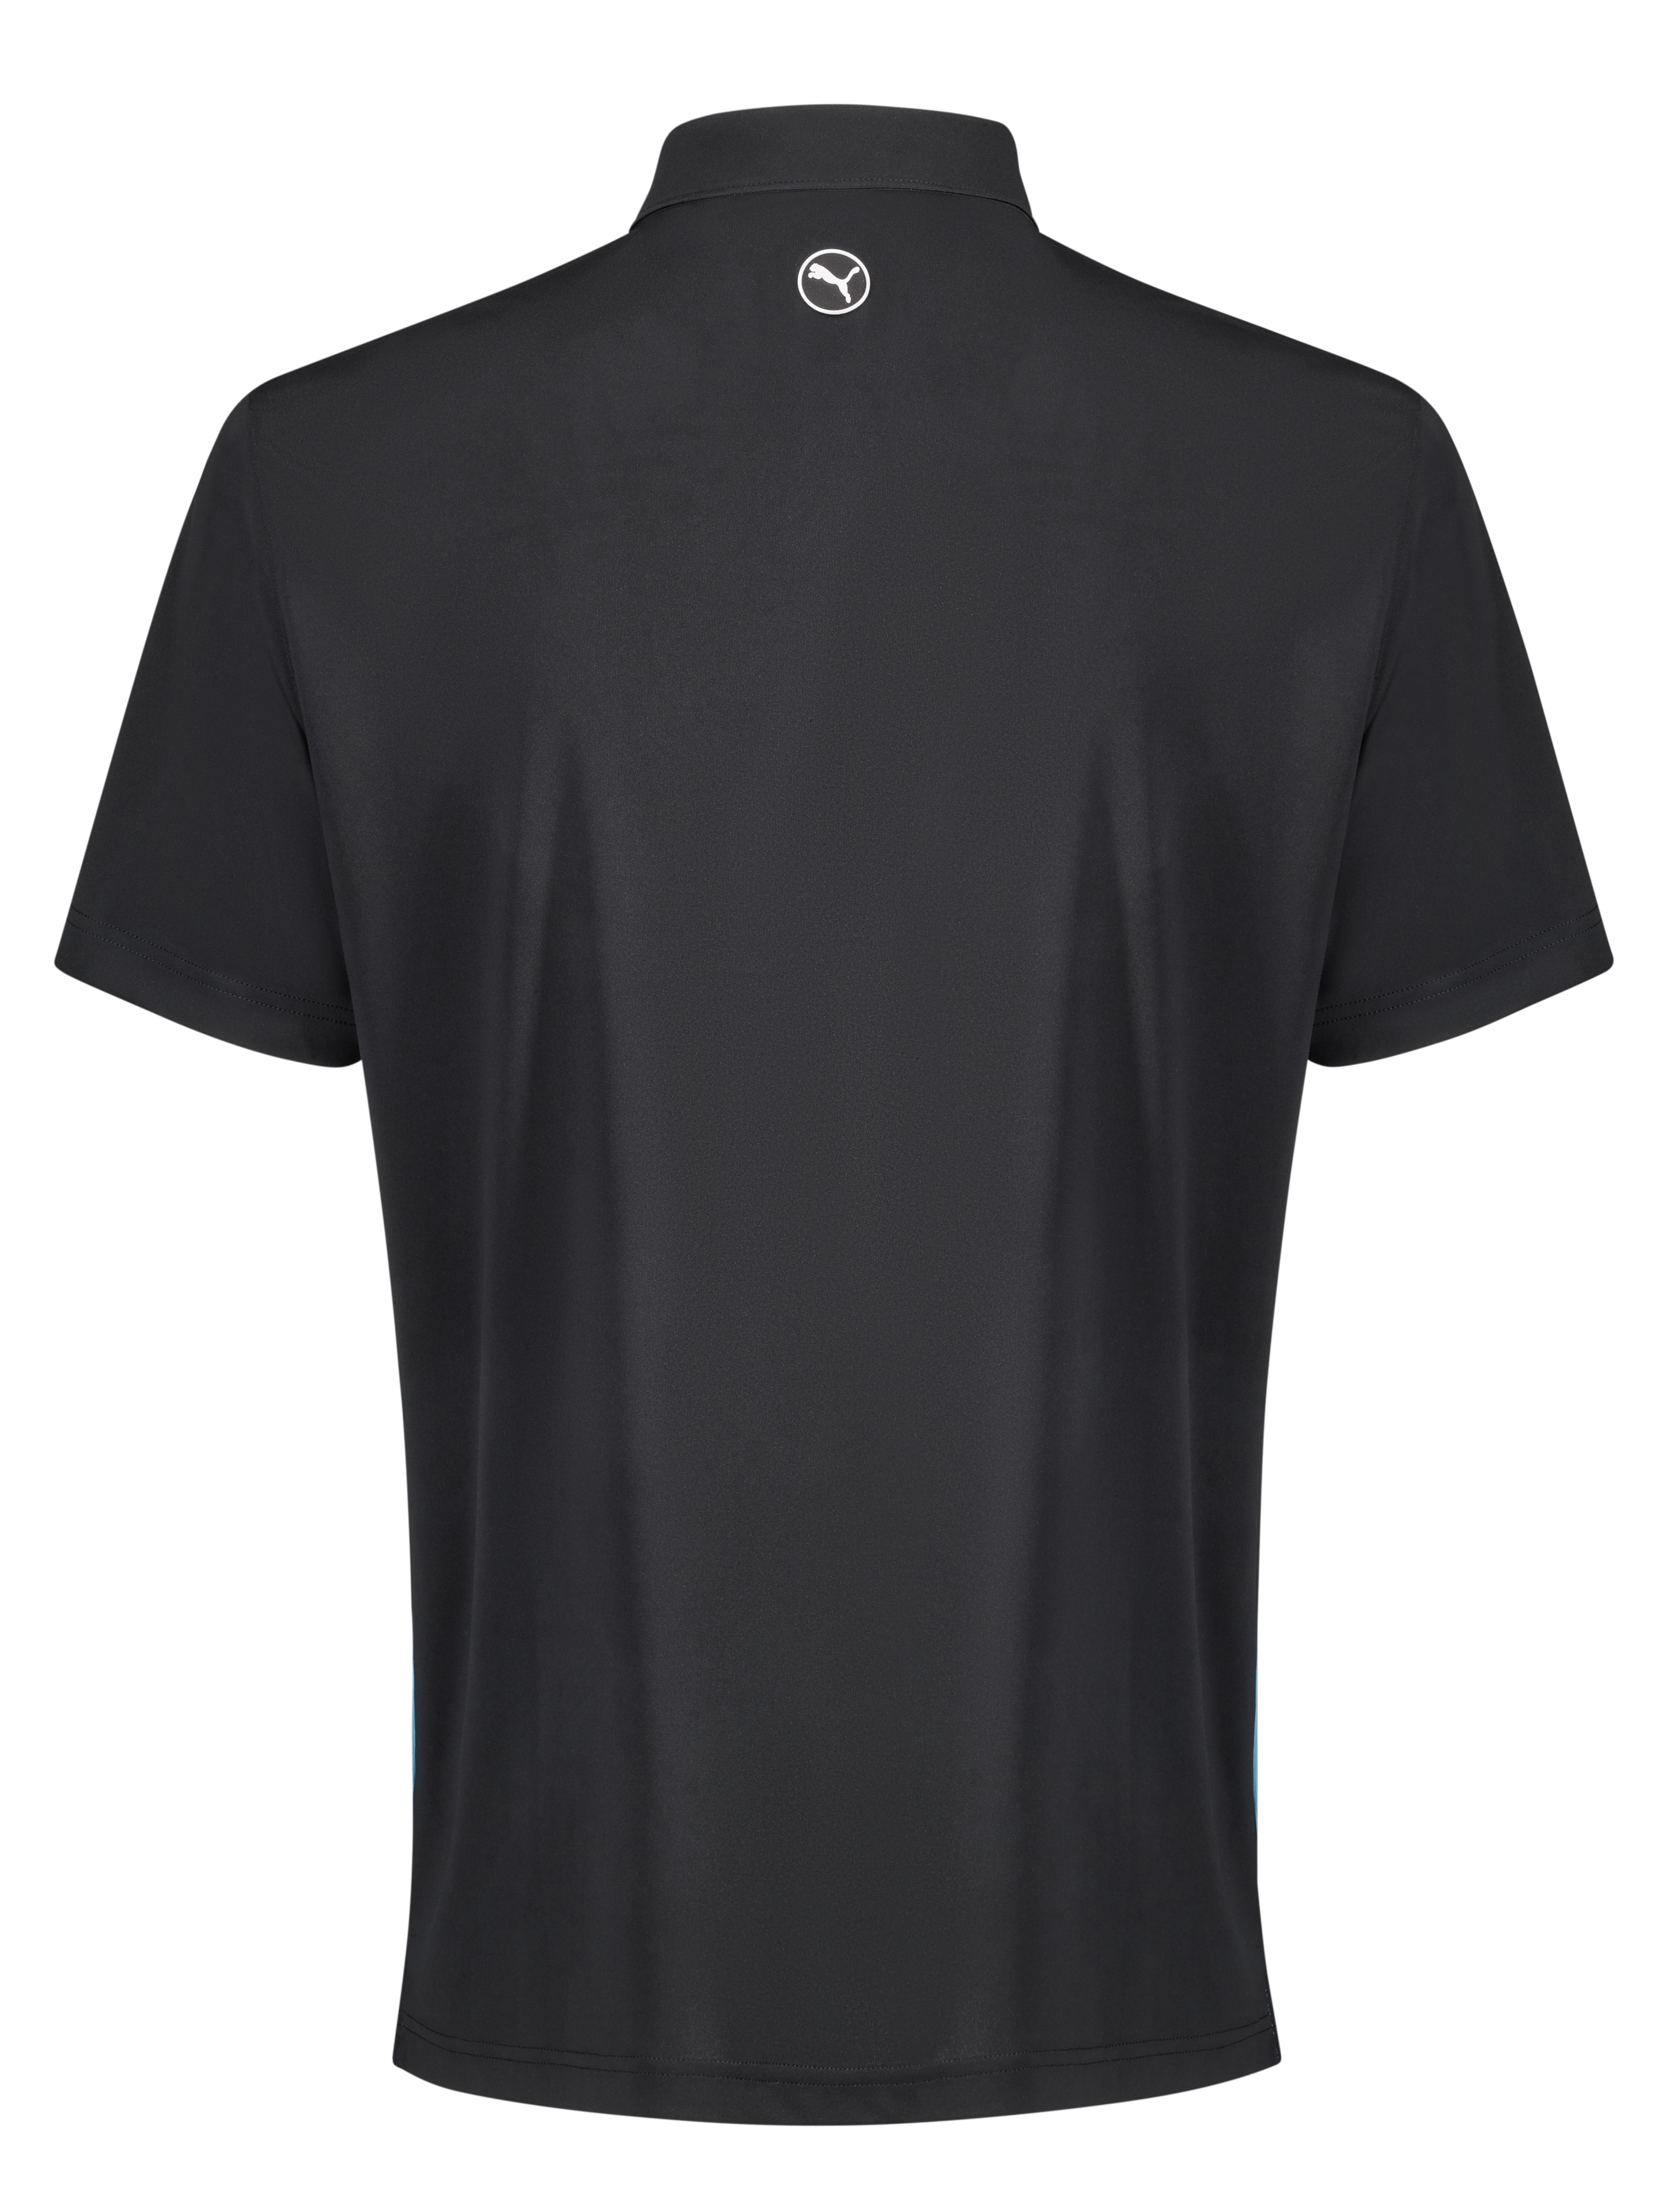 Golf-Poloshirt Herren, Pure Colorblock - black / Aqua Blue / white, M